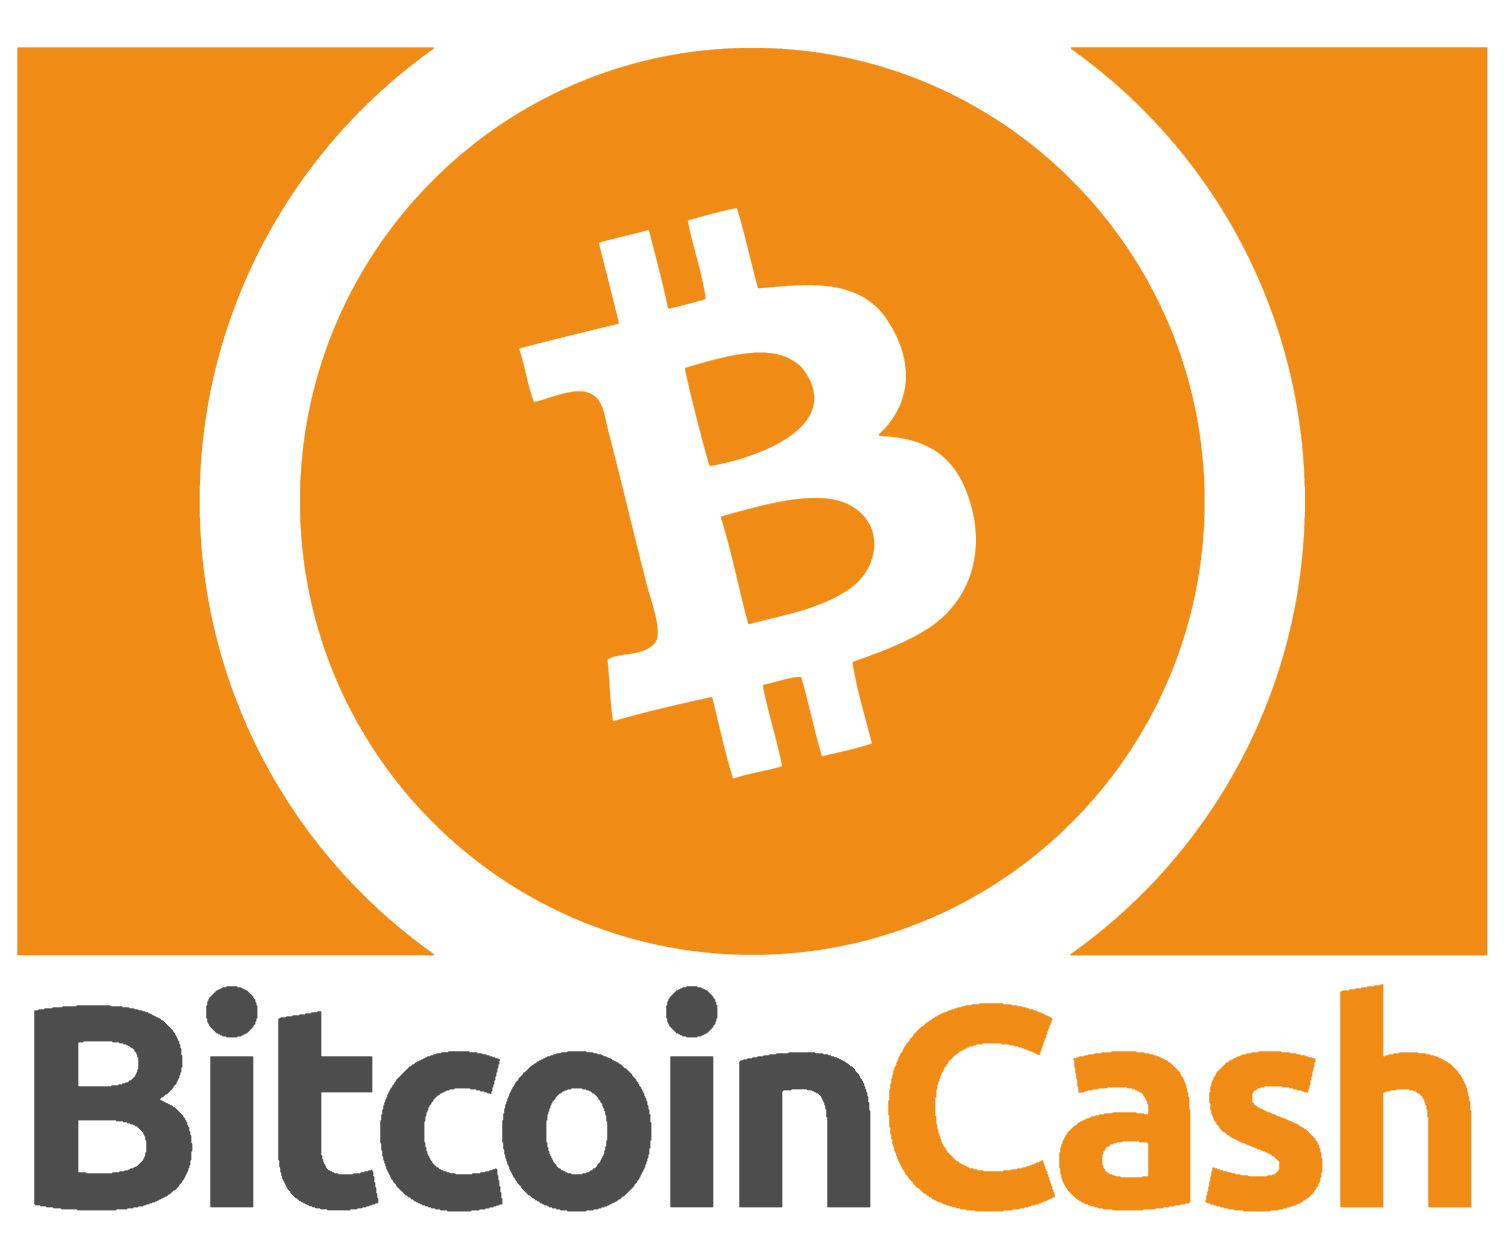 Alles over de aankomende Bitcoin Cash hard fork